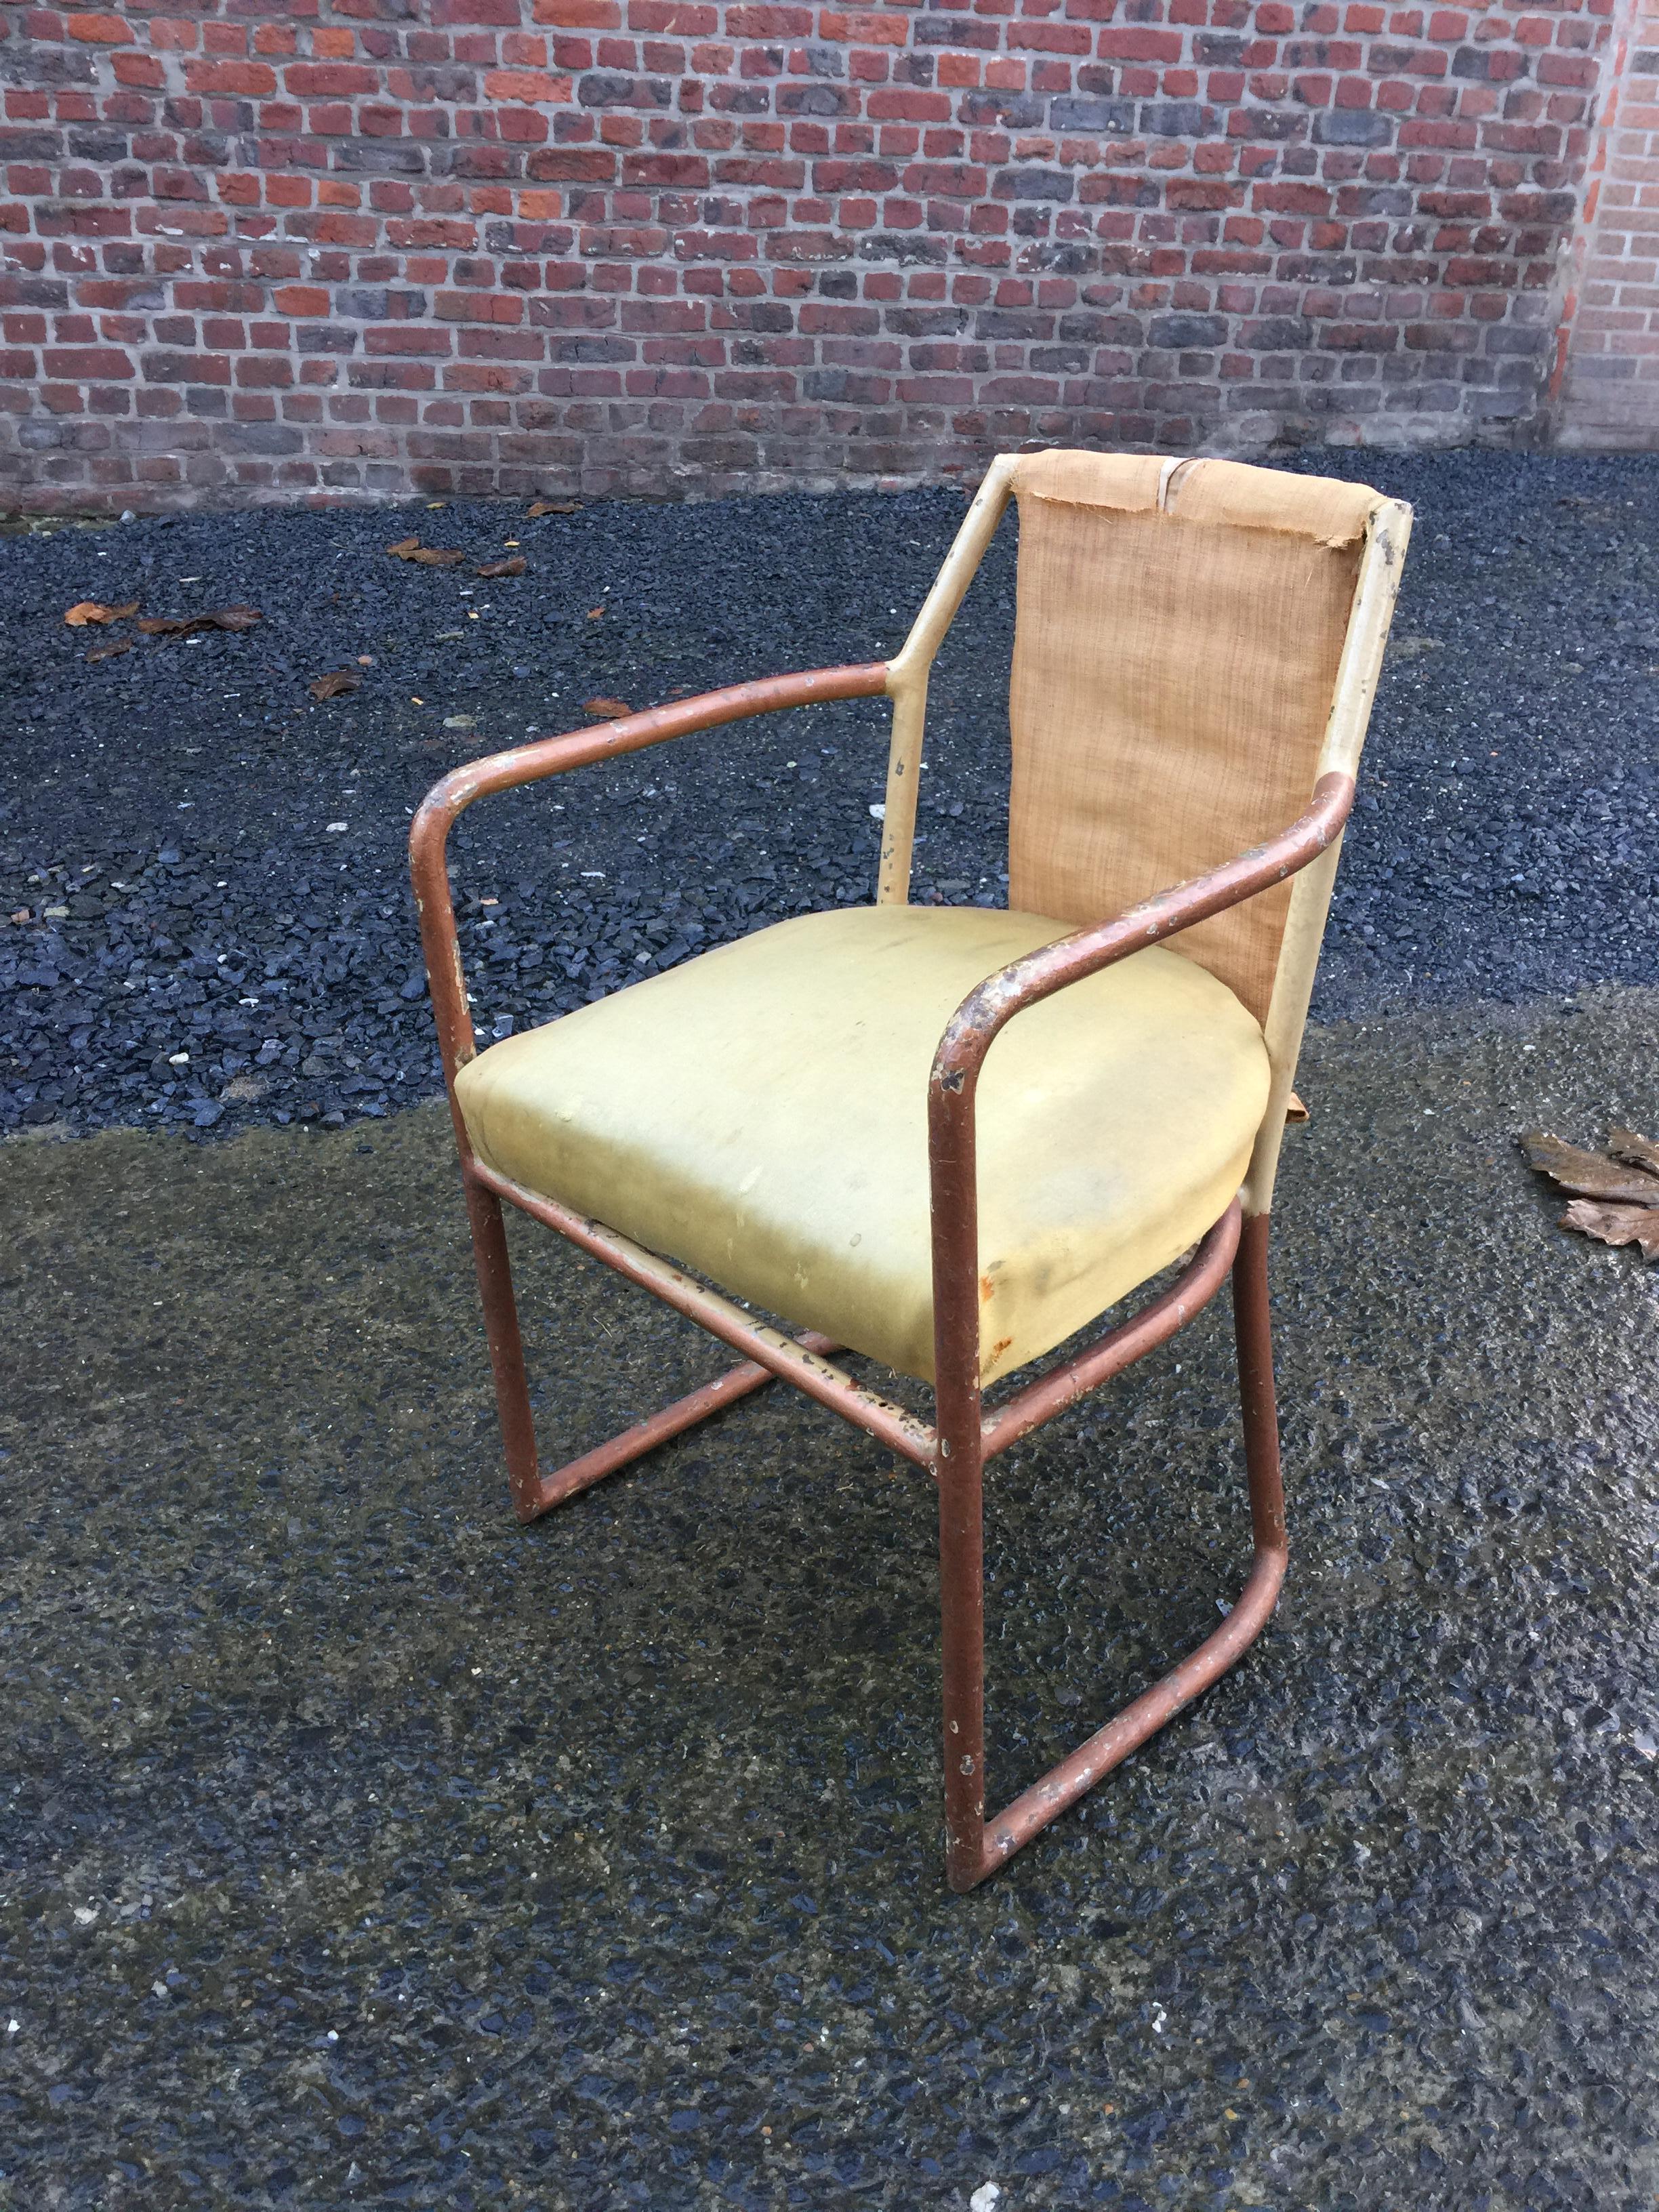 Modernist Art Deco chair in copper, circa 1920.